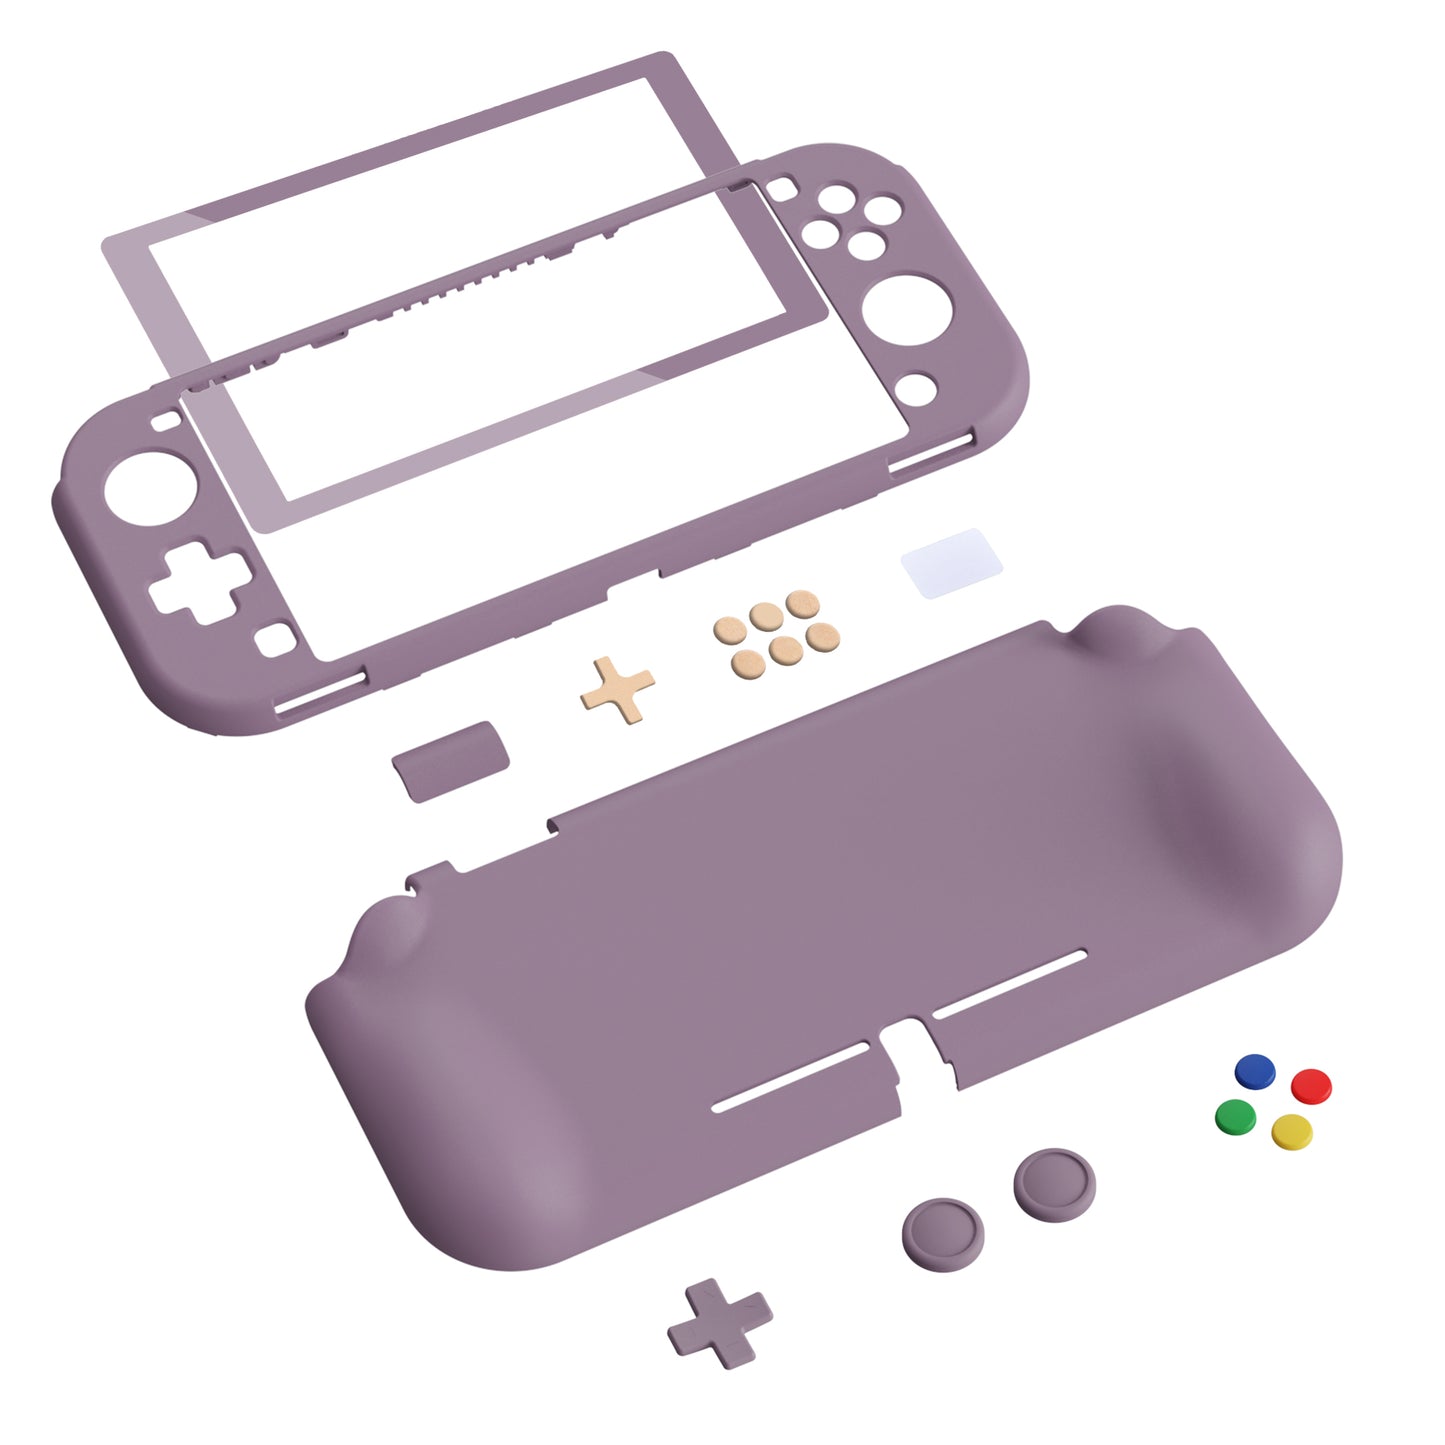 PlayVital ZealProtect Protective Case for Nintendo Switch Lite, Hard Shell Ergonomic Grip Cover for Nintendo Switch Lite w/Screen Protector & Thumb Grip Caps & Button Caps - Dark Grayish Violet - PSLYP3002 playvital